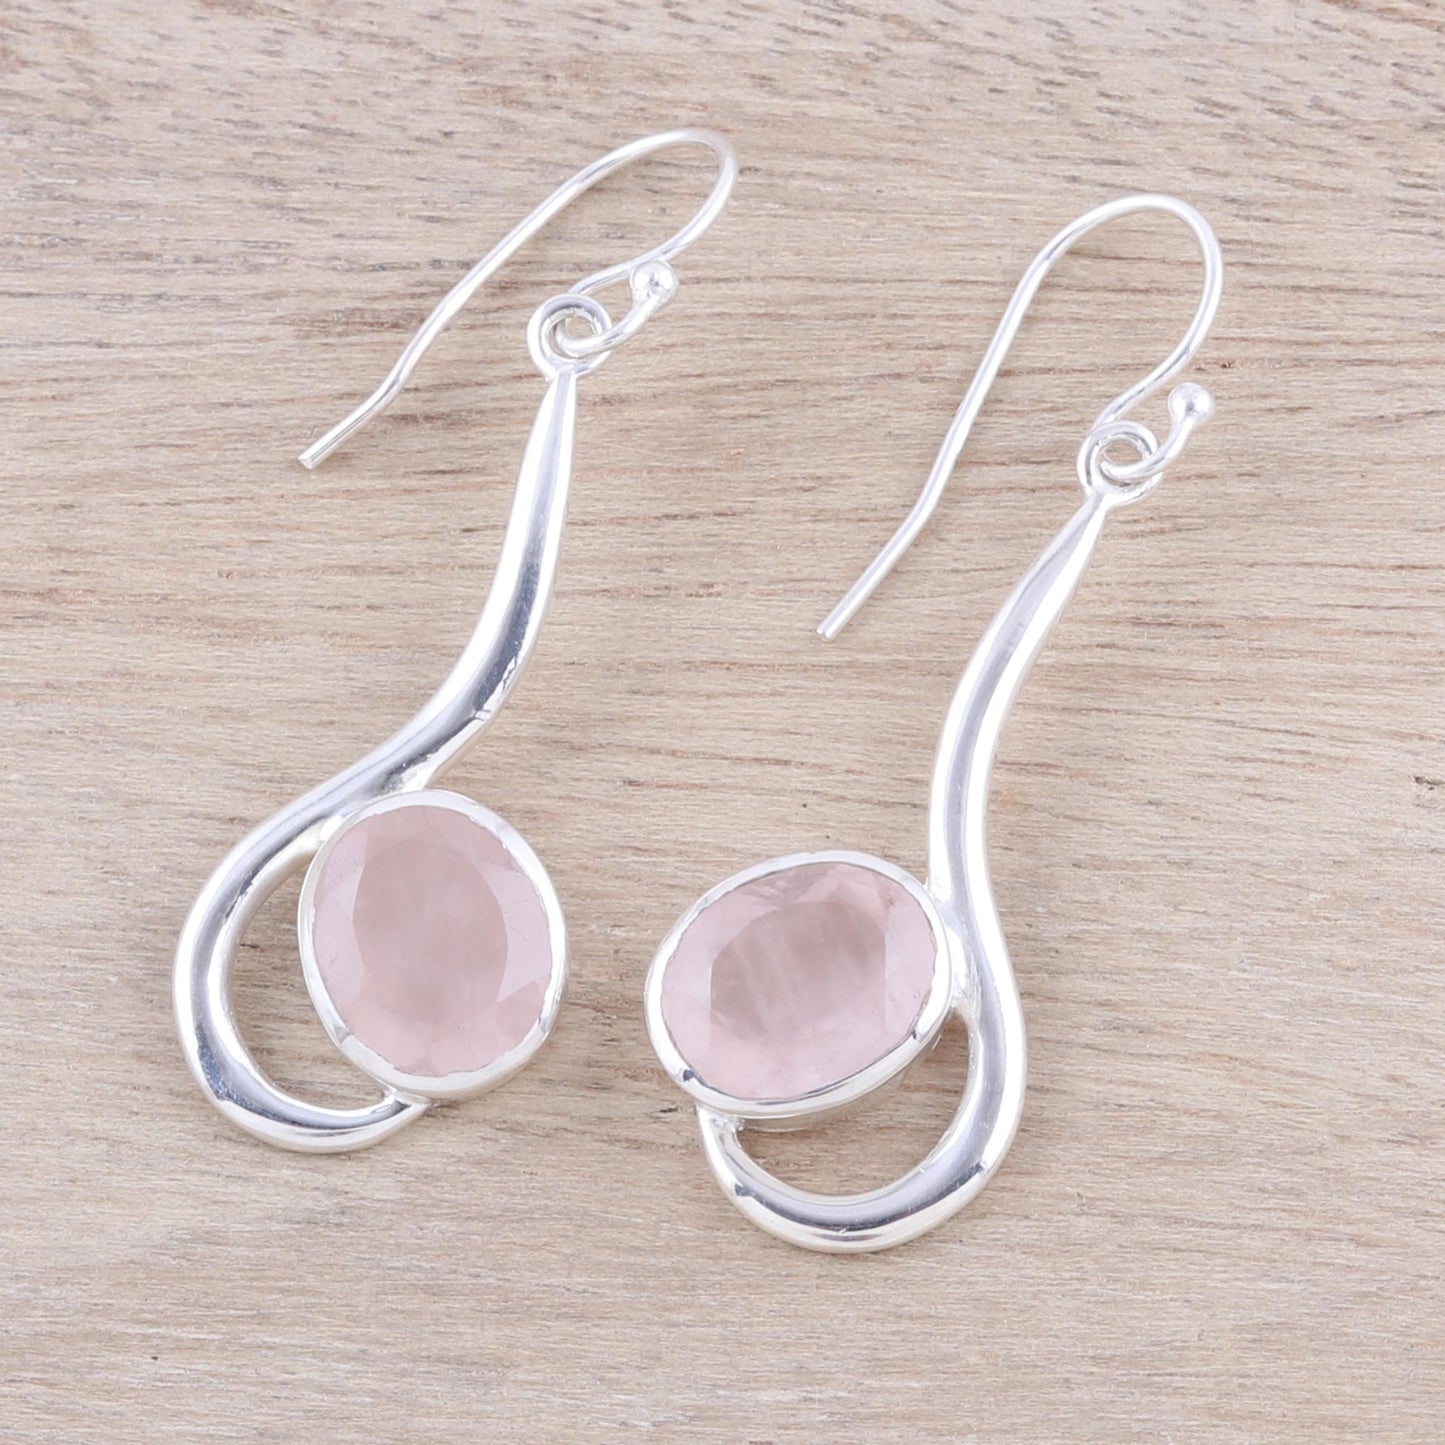 Cool Sabarmati Rose Quartz Ovals Set In Sterling Silver Arc Dangle Earrings